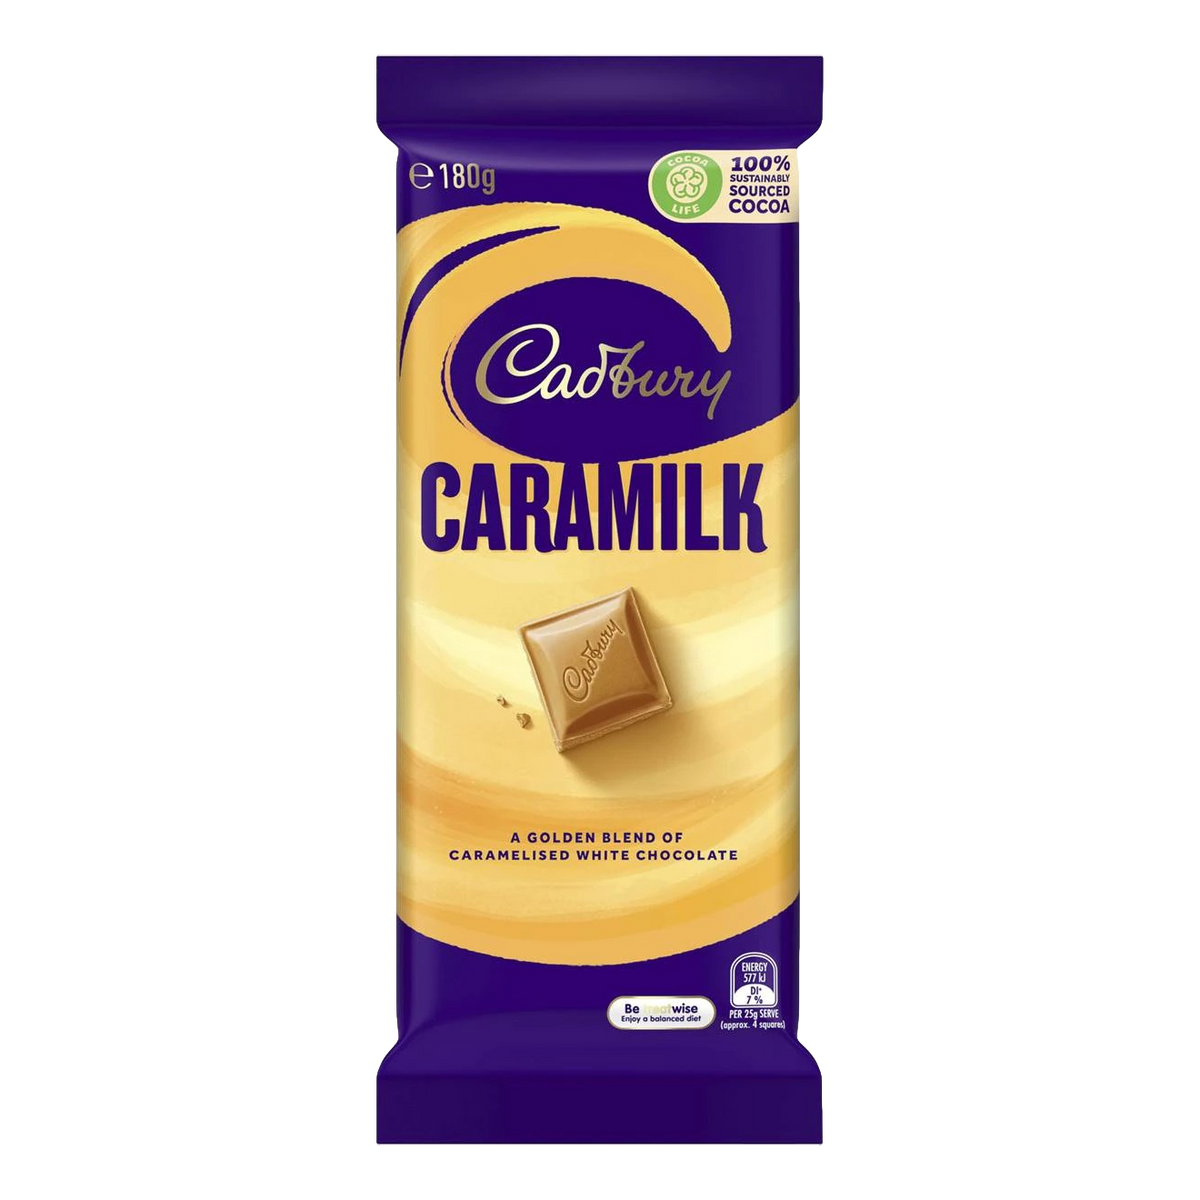 Cadbury Caramilk Chocolate Block 180g